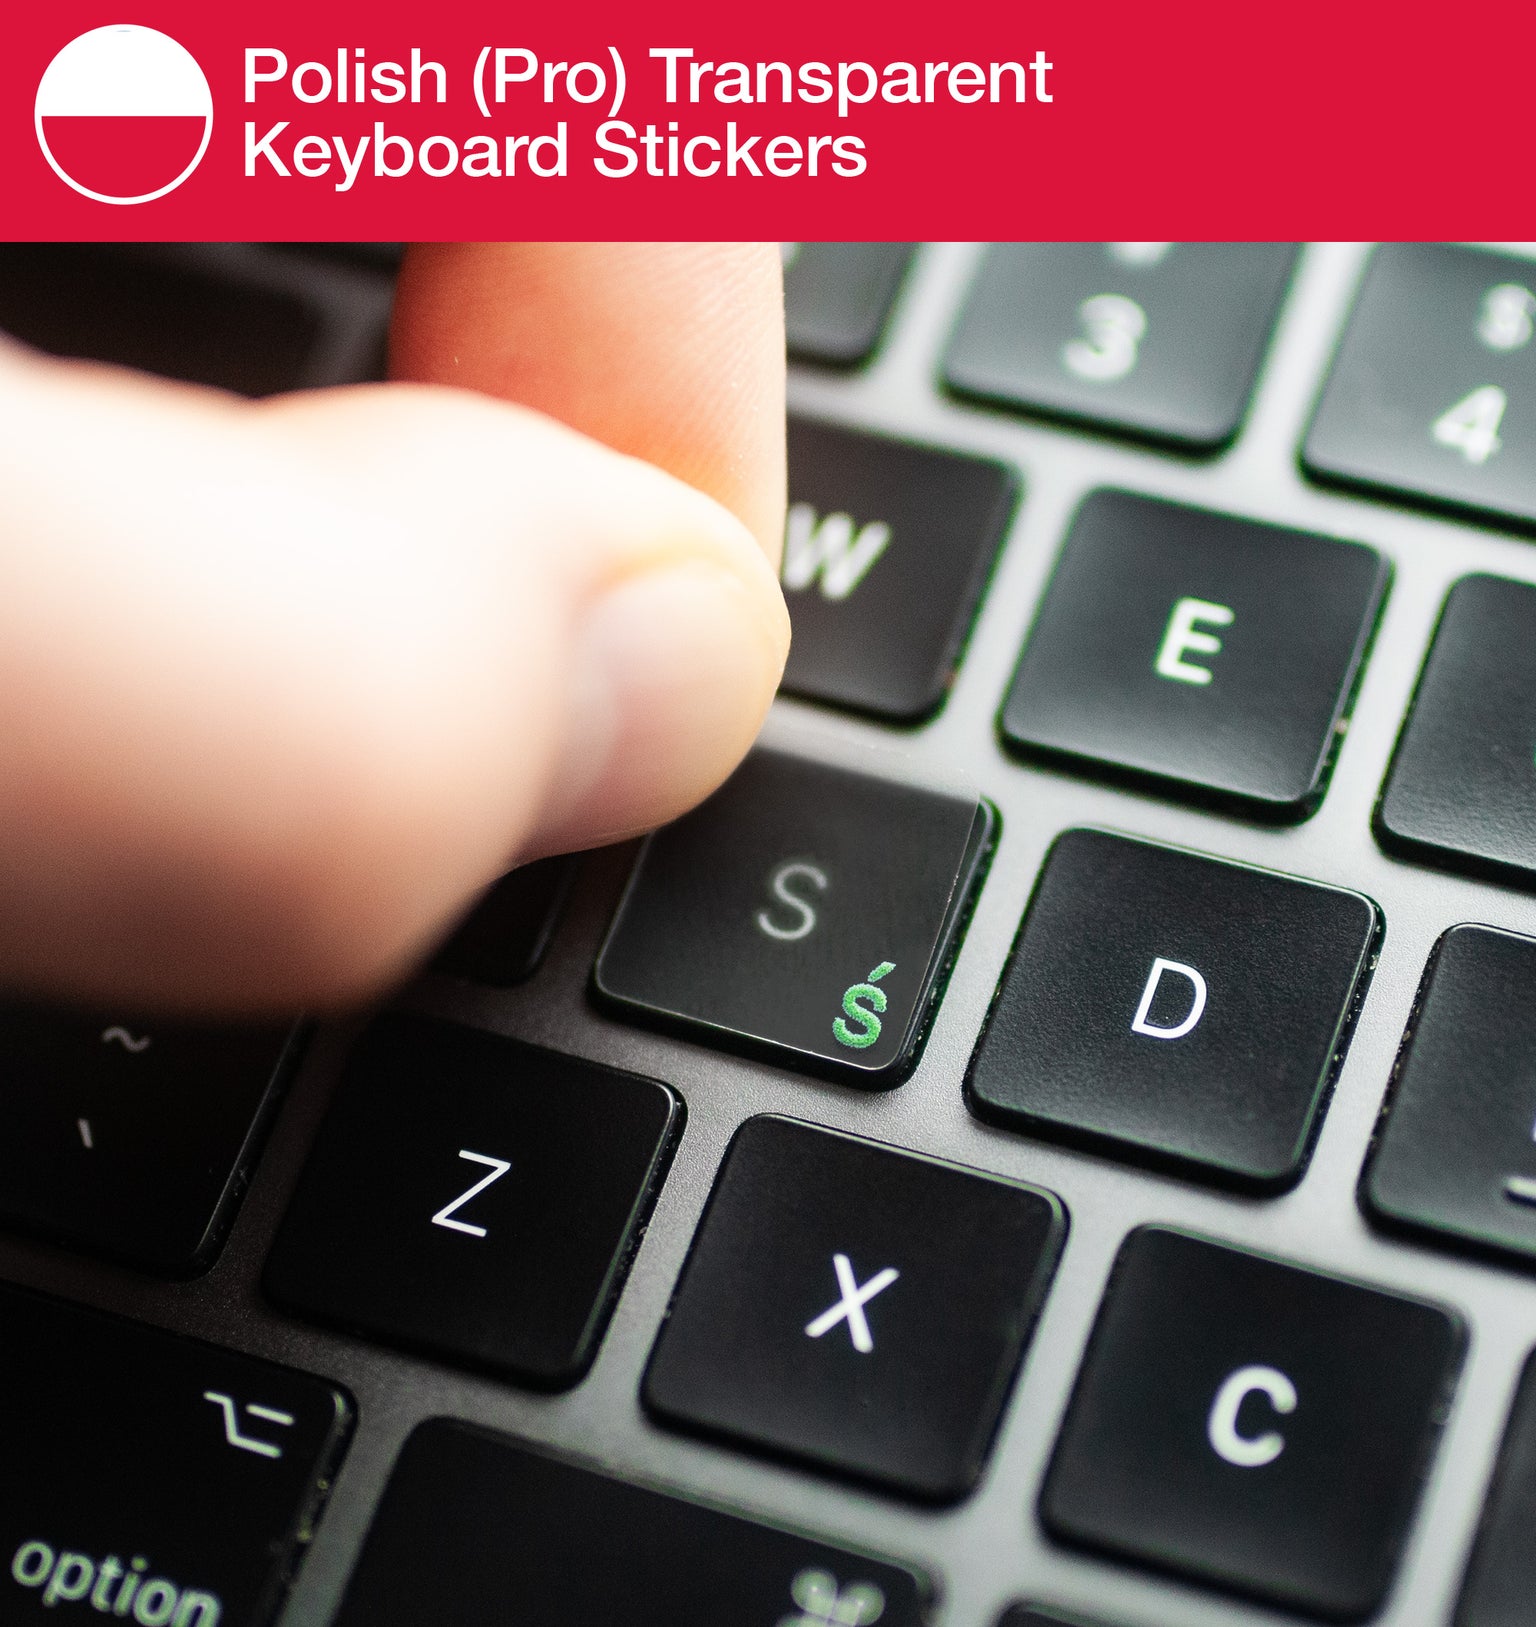 Polish (Pro) Transparent Keyboard Stickers with Polish layout